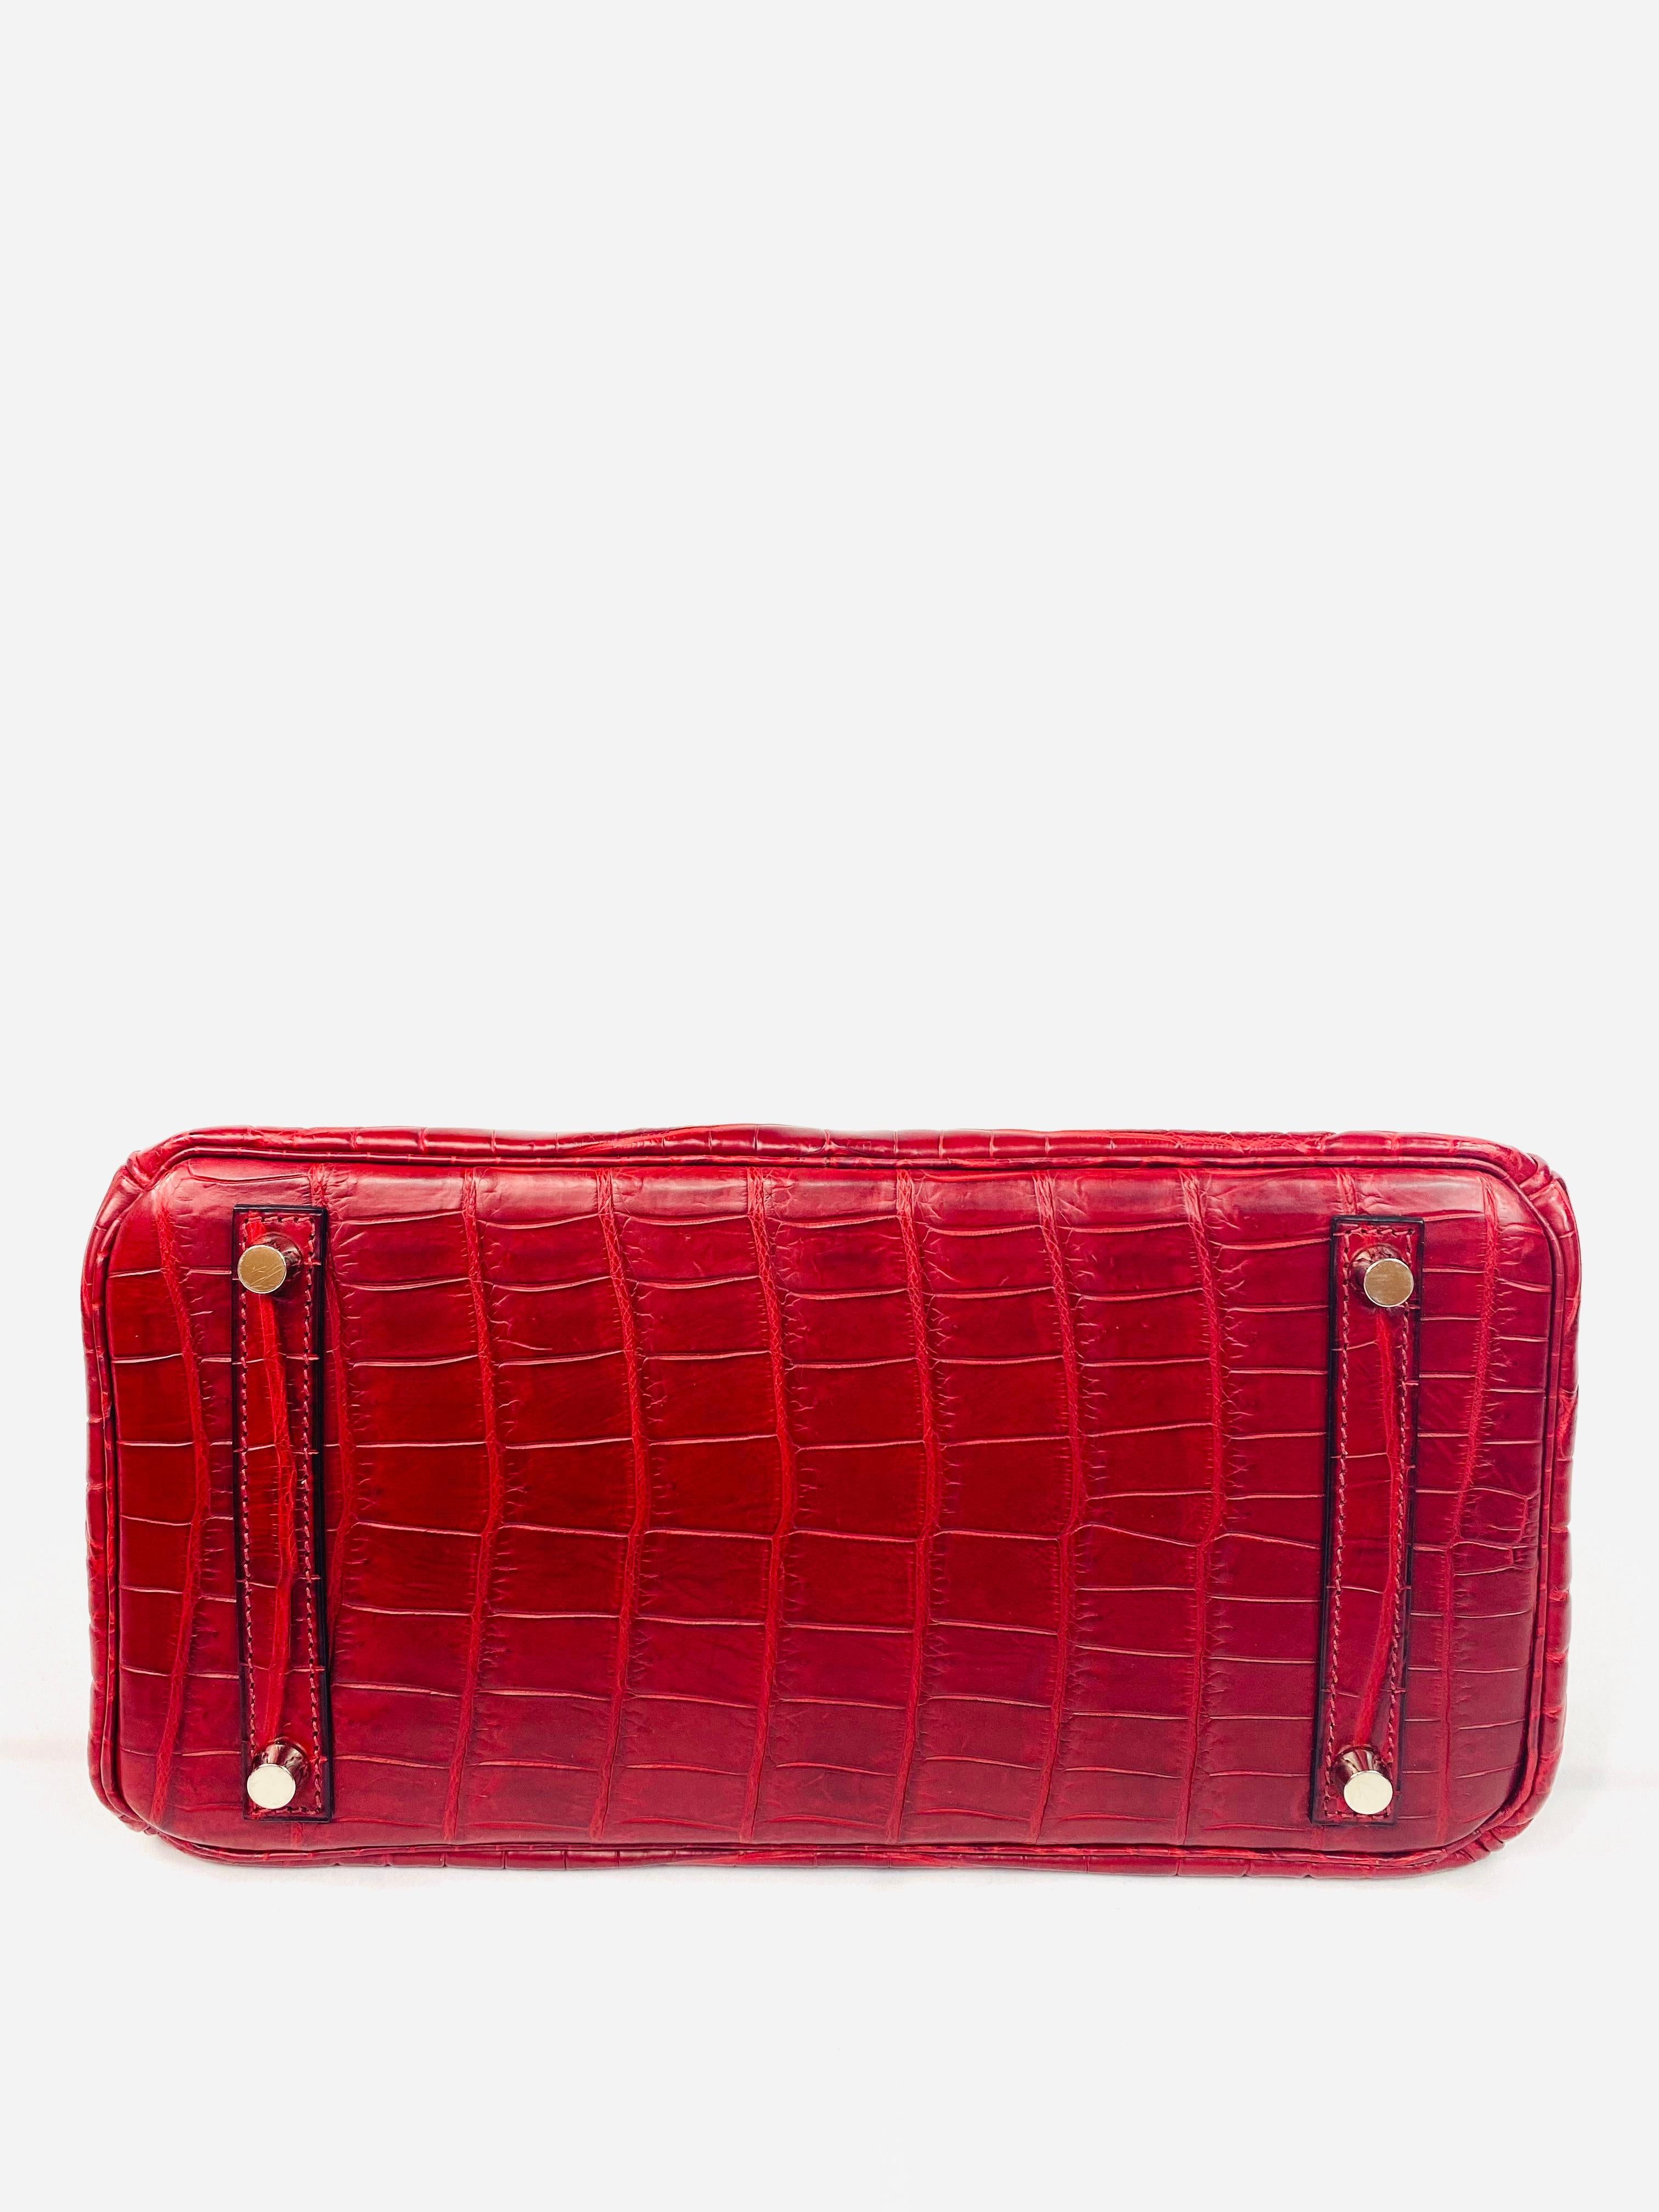 Hermès Niloticus Red Crocodile Leather Birkin 30 Handbag 1